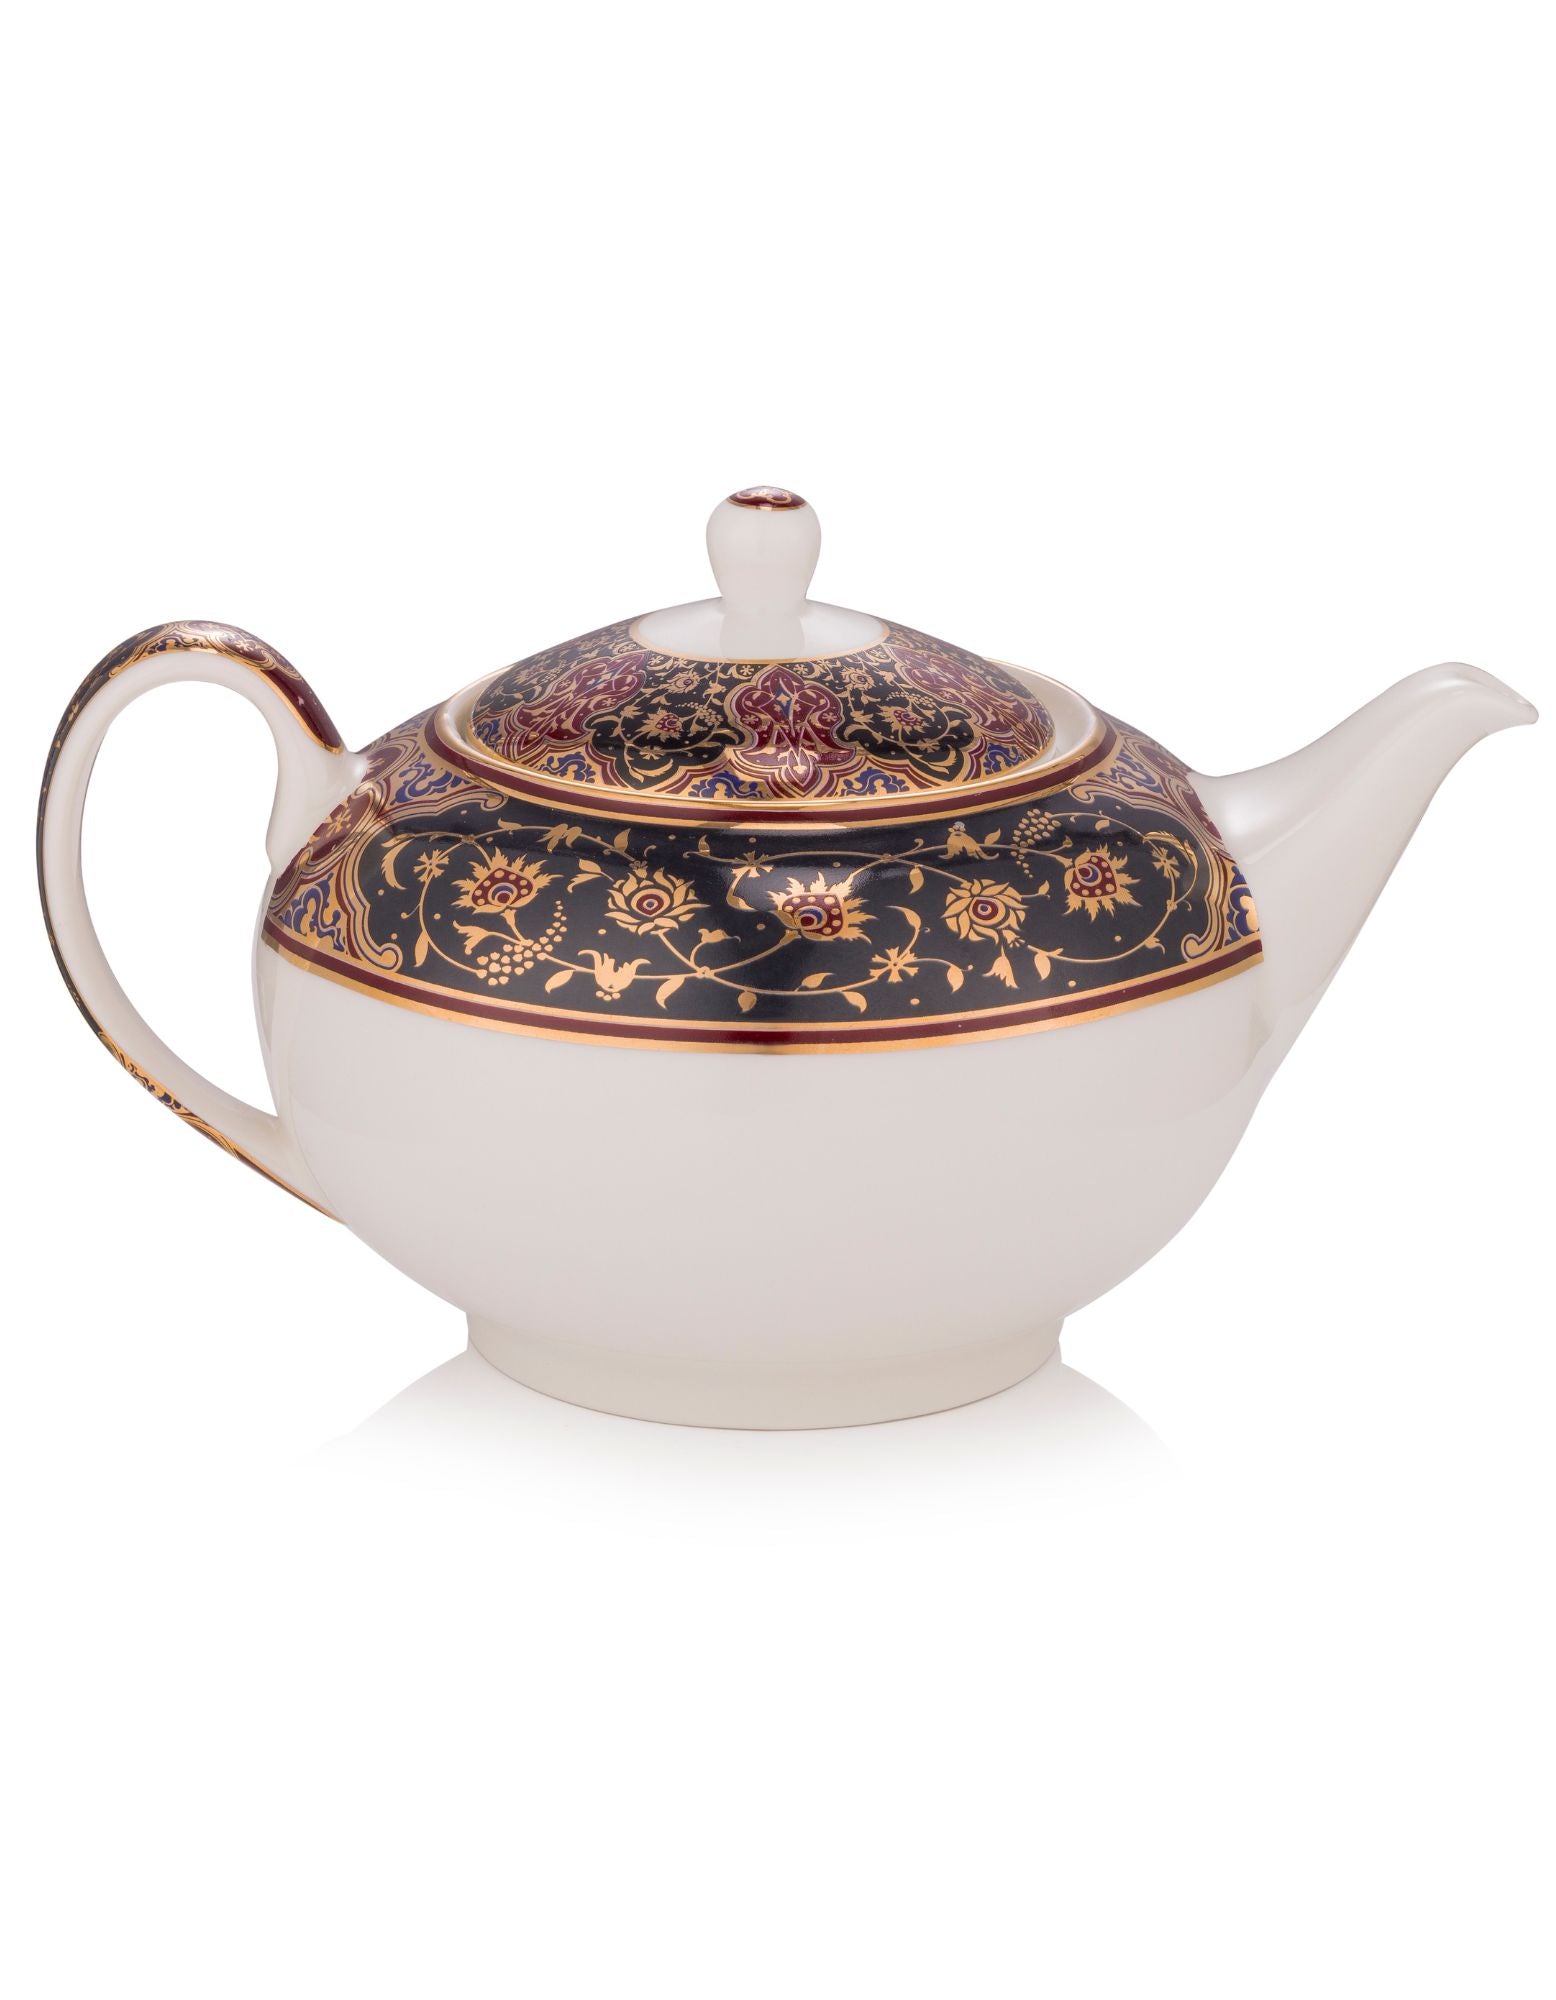 Begum Teapot